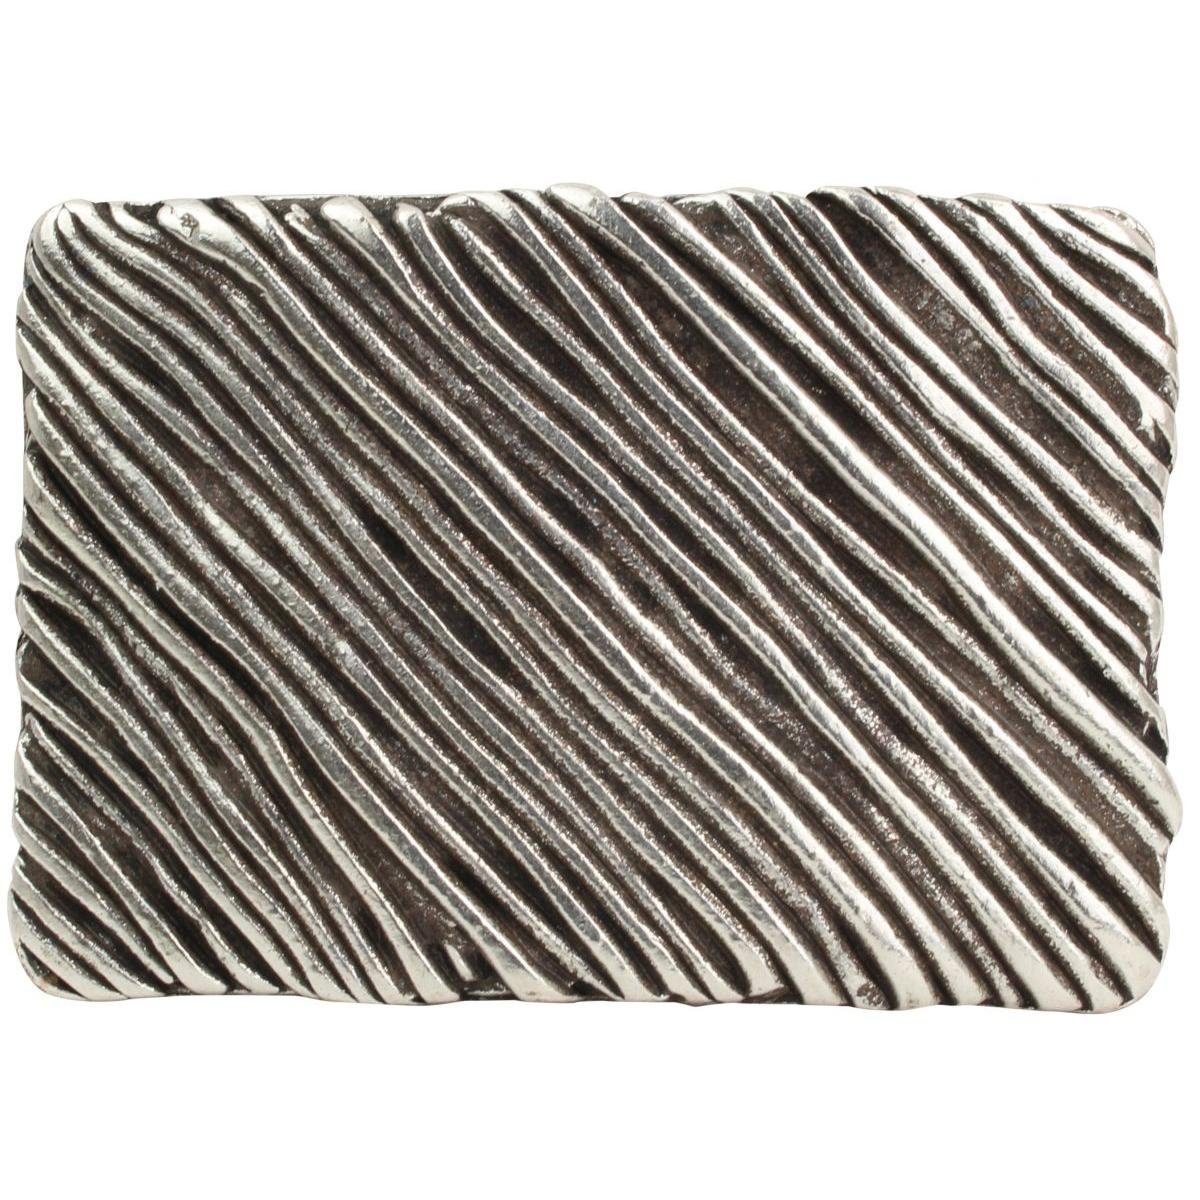 - Silber Stripes Gürtelschnalle Wechselschließe Gürtelschließe Buckle BELTINGER Superficial 40m 4,0 cm